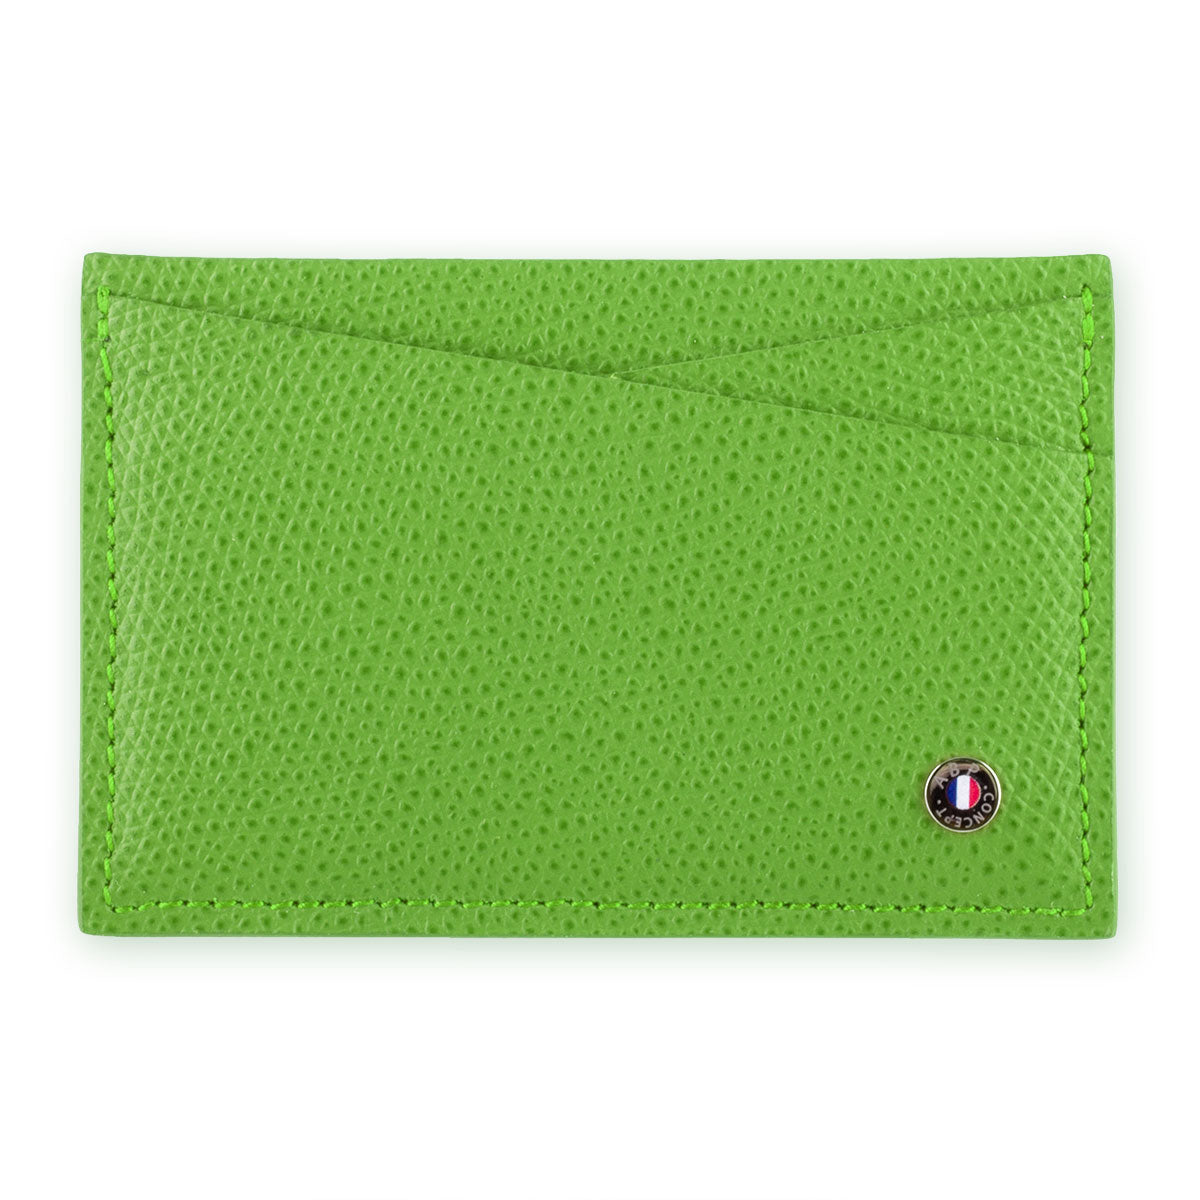 "Essentials" leather card holder - Grained calf (black, blue, green, brown, orange...)